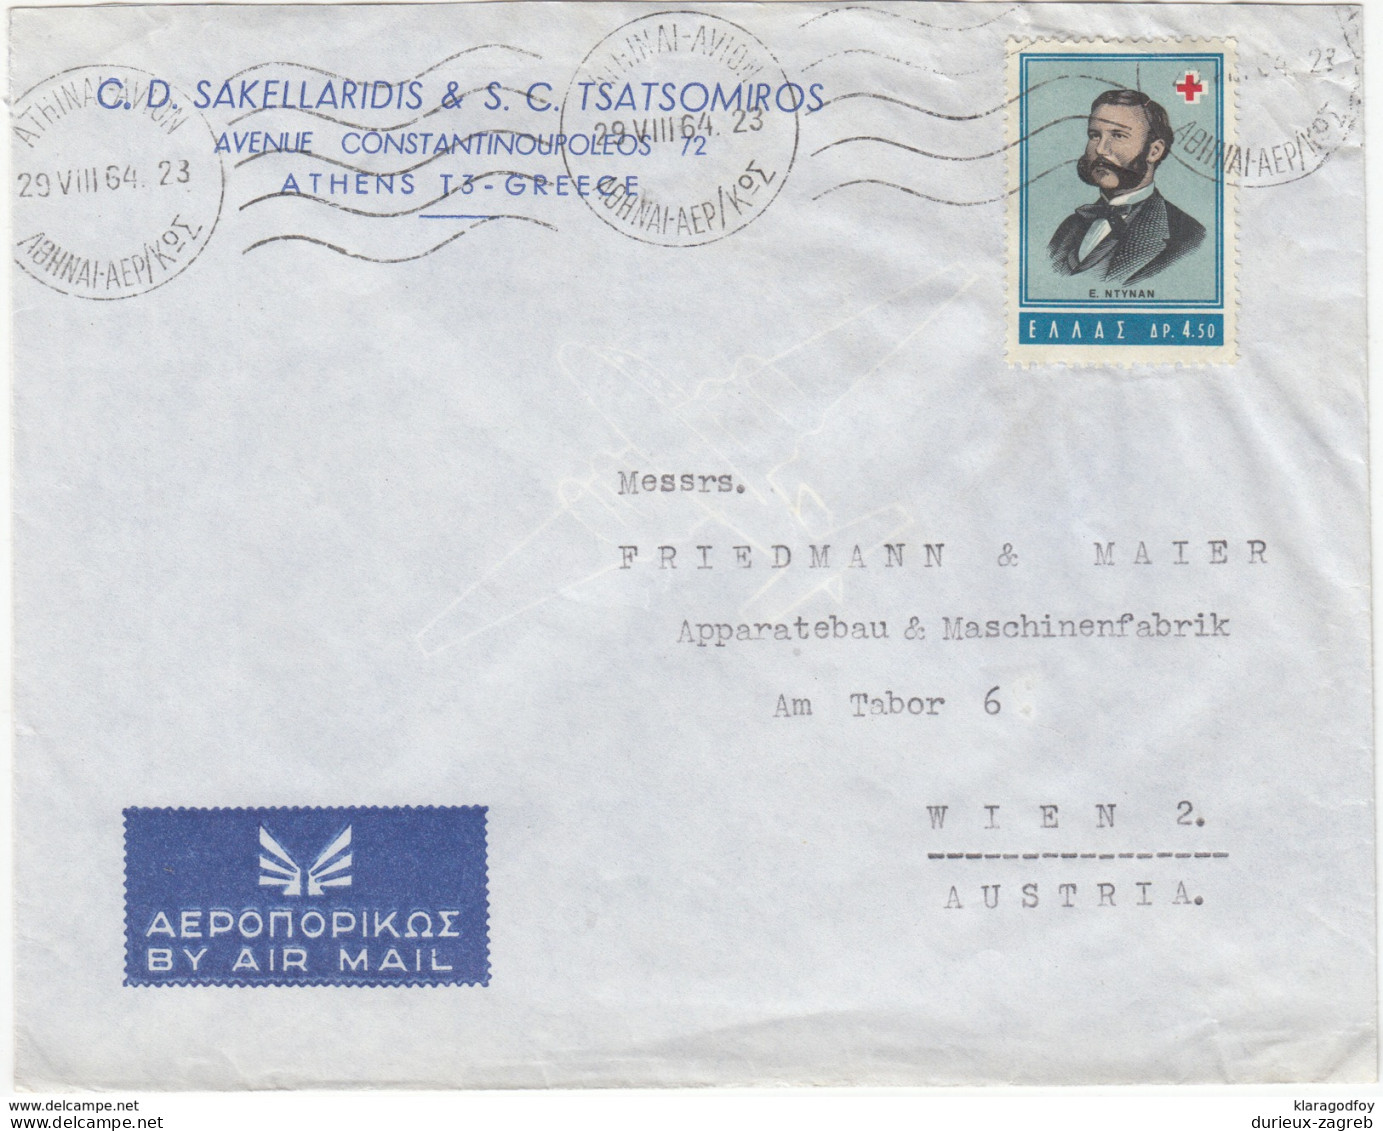 C.D. Sakellaridis & S.C. Tsatsomiros Company Air Mail Letter Cover Travelled 1964 To Austria B171005 - Cartas & Documentos